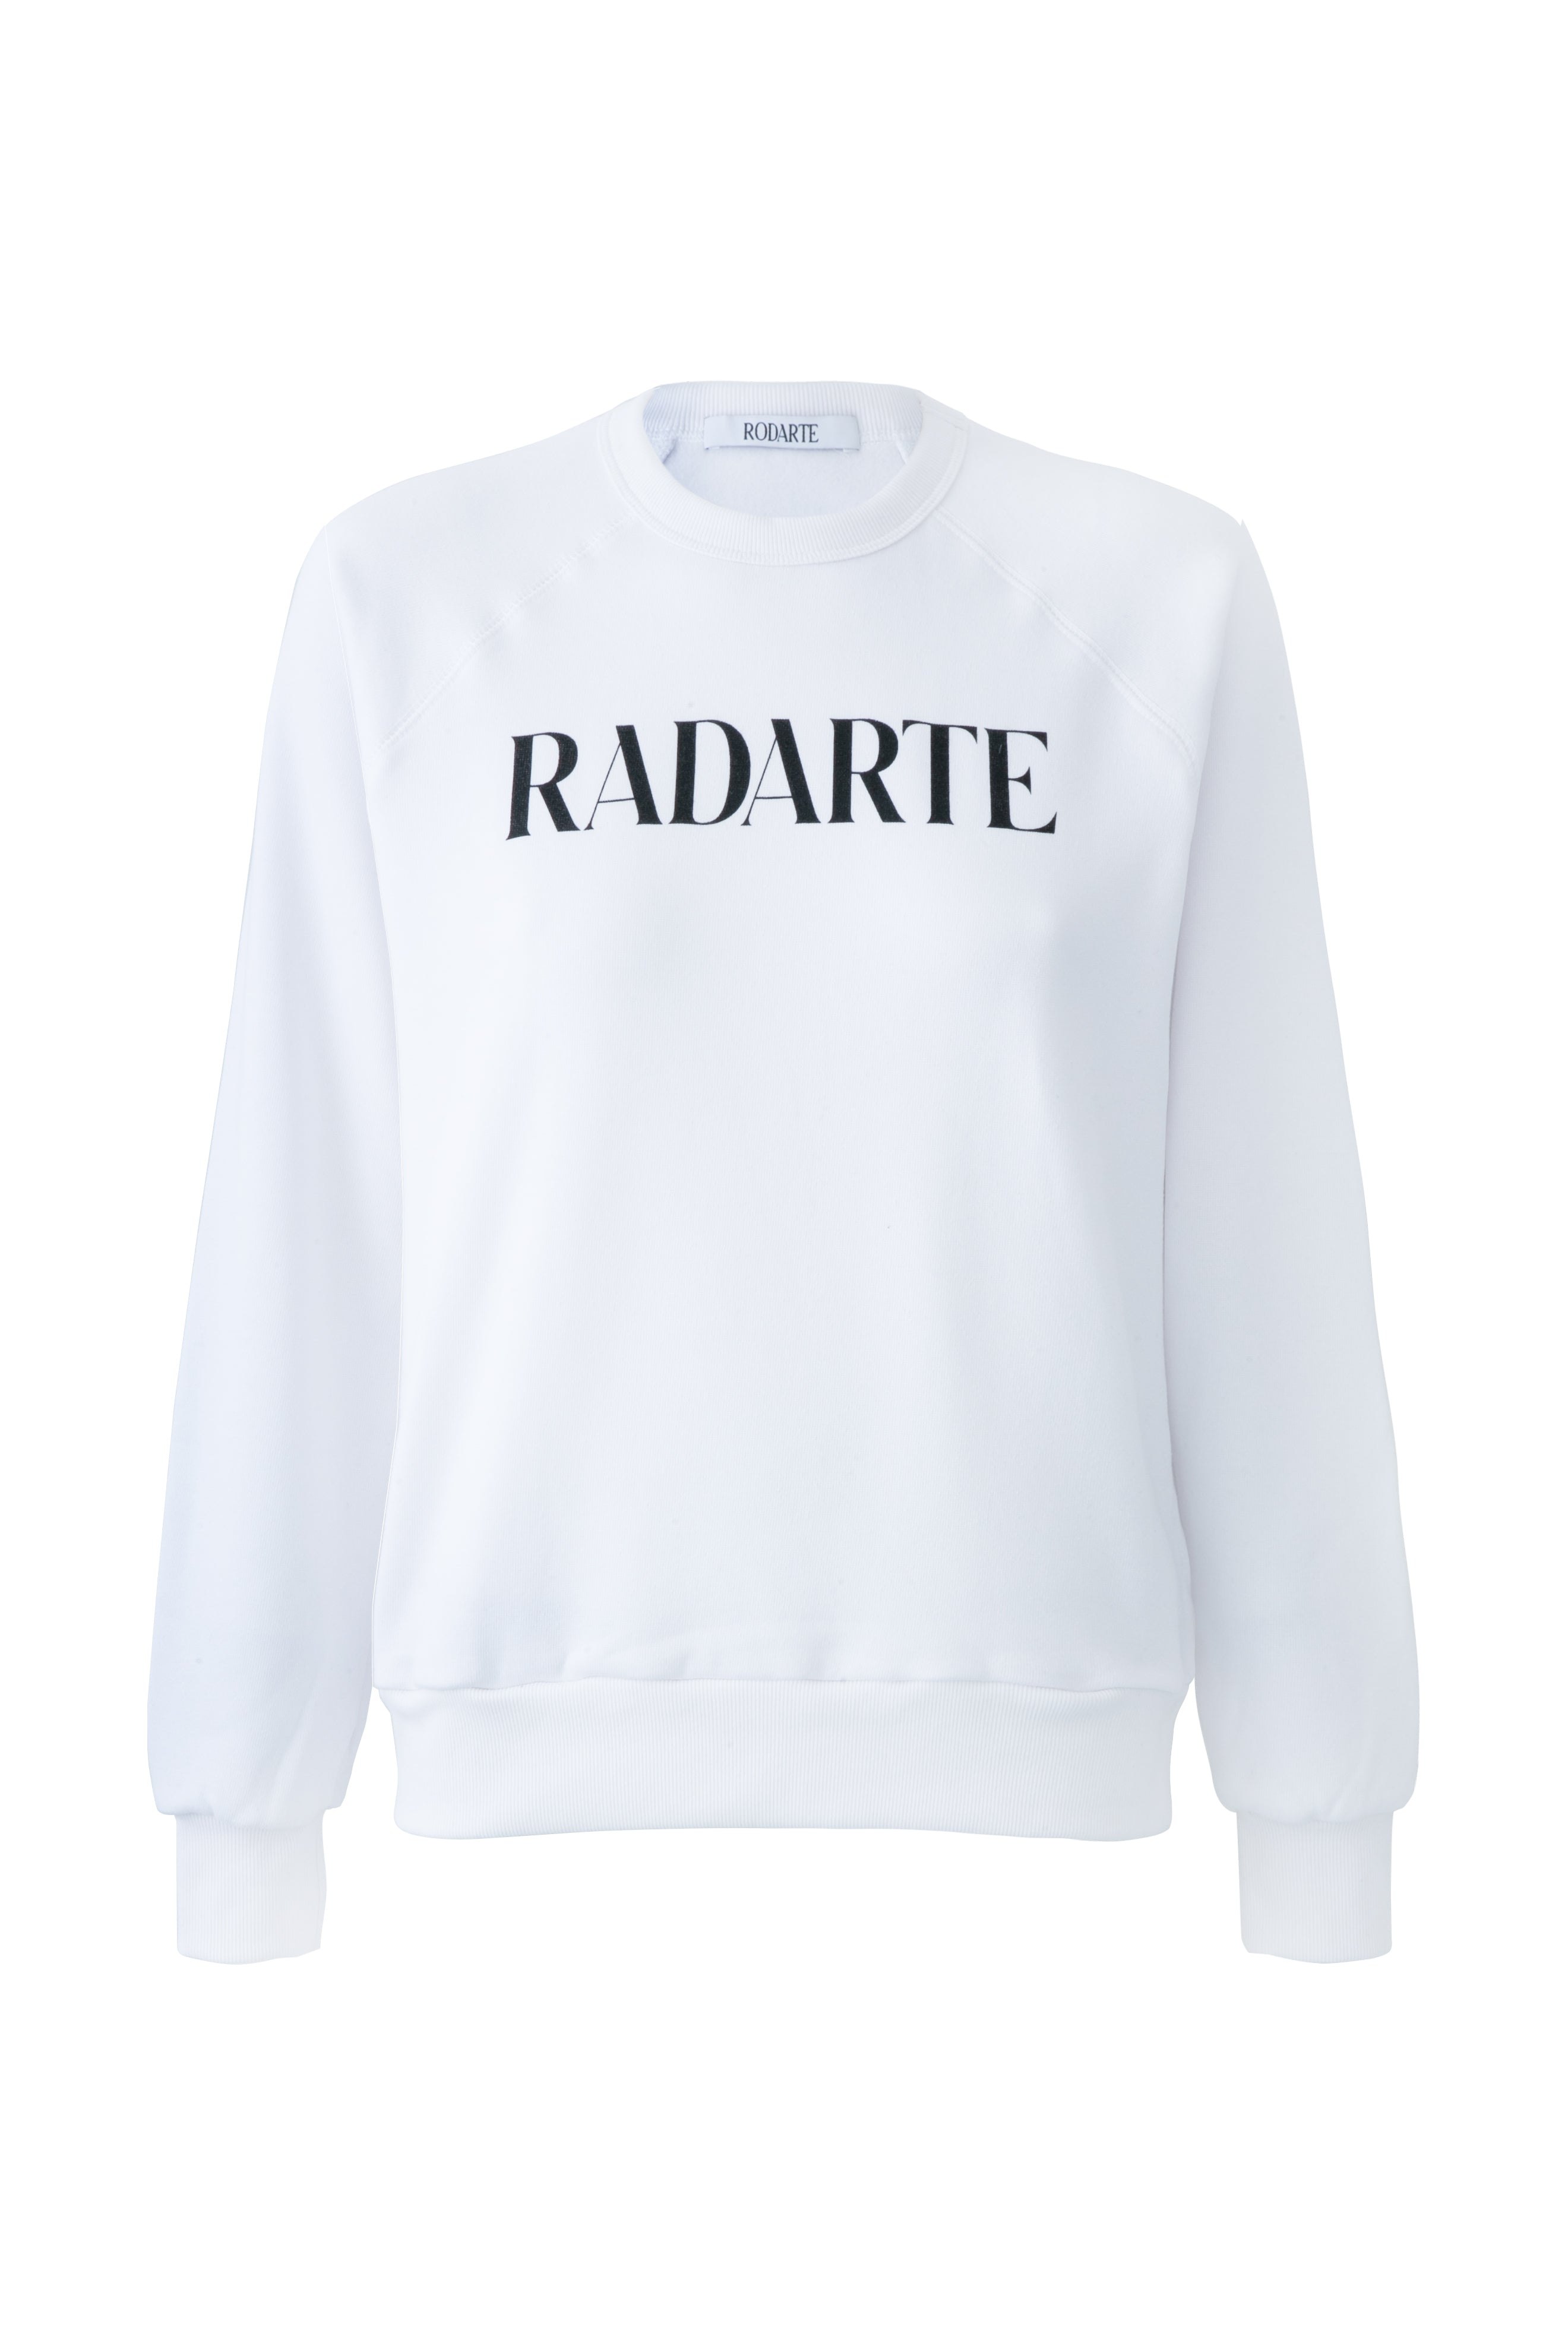 Tie Dye Mushroom Print Radarte Crop Sweatshirt – Rodarte